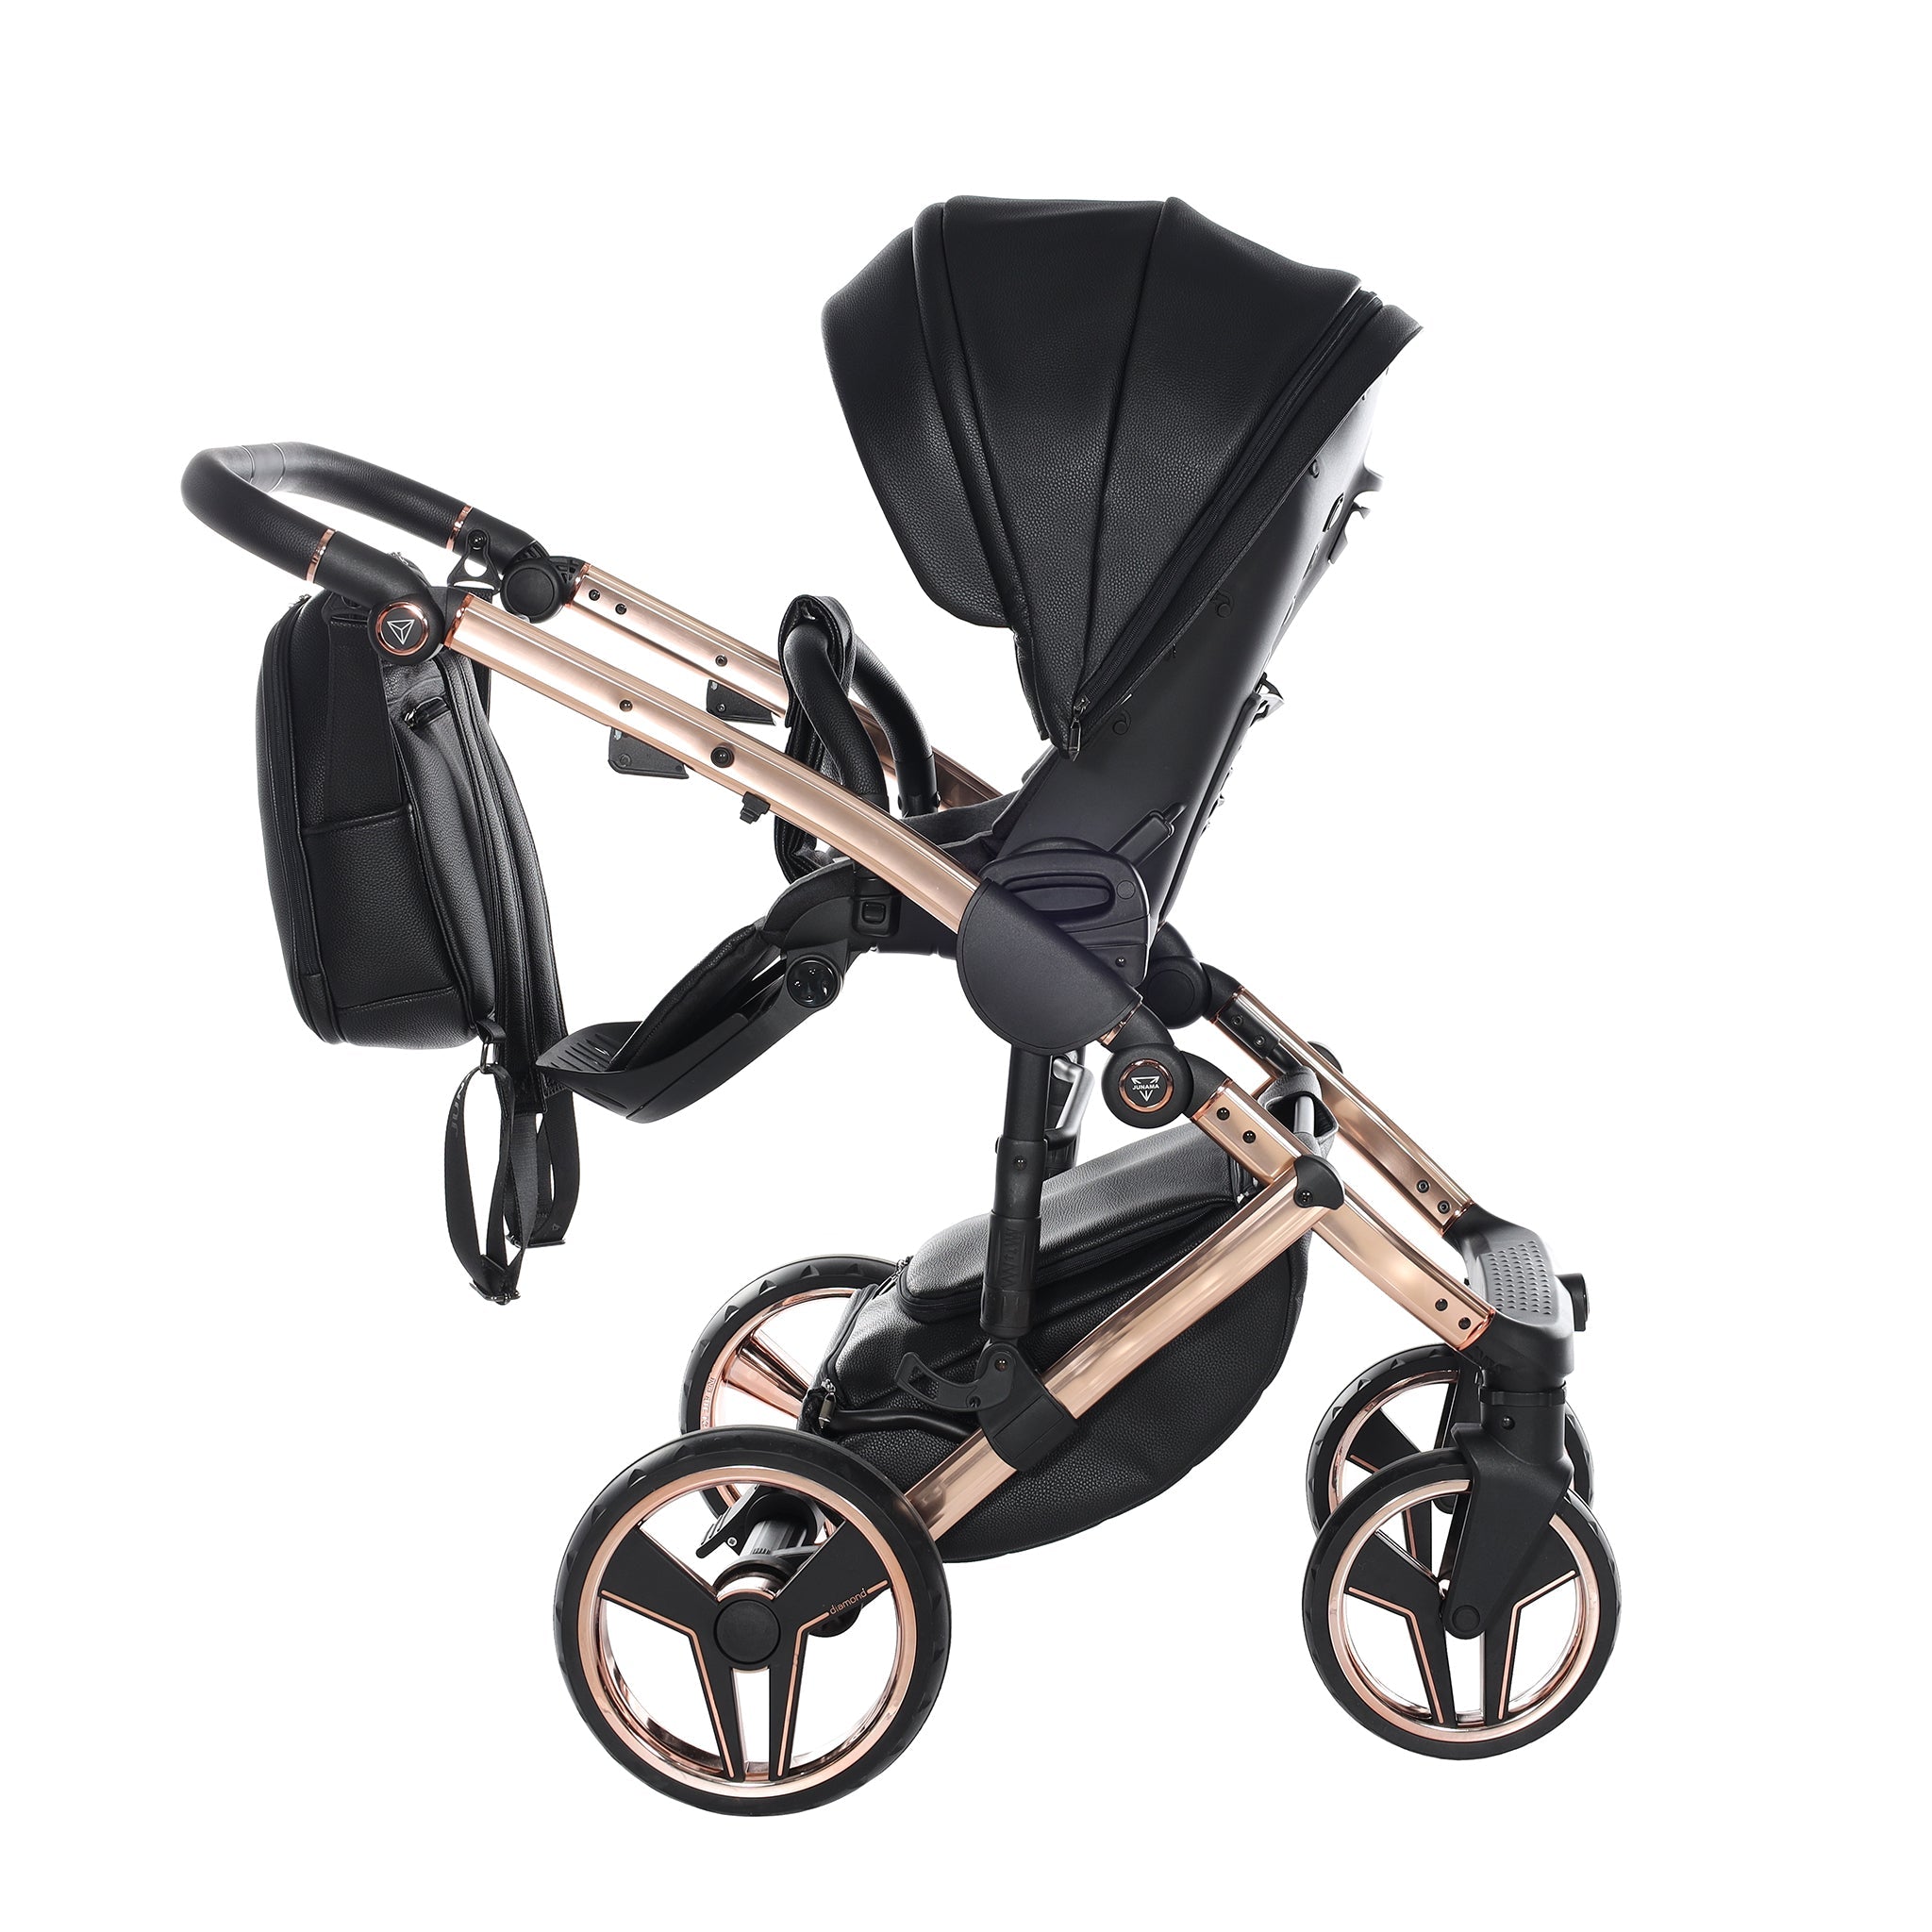 Junama Handcraft, baby prams or stroller 2 in 1 - Black and copper, number: JUNHC06